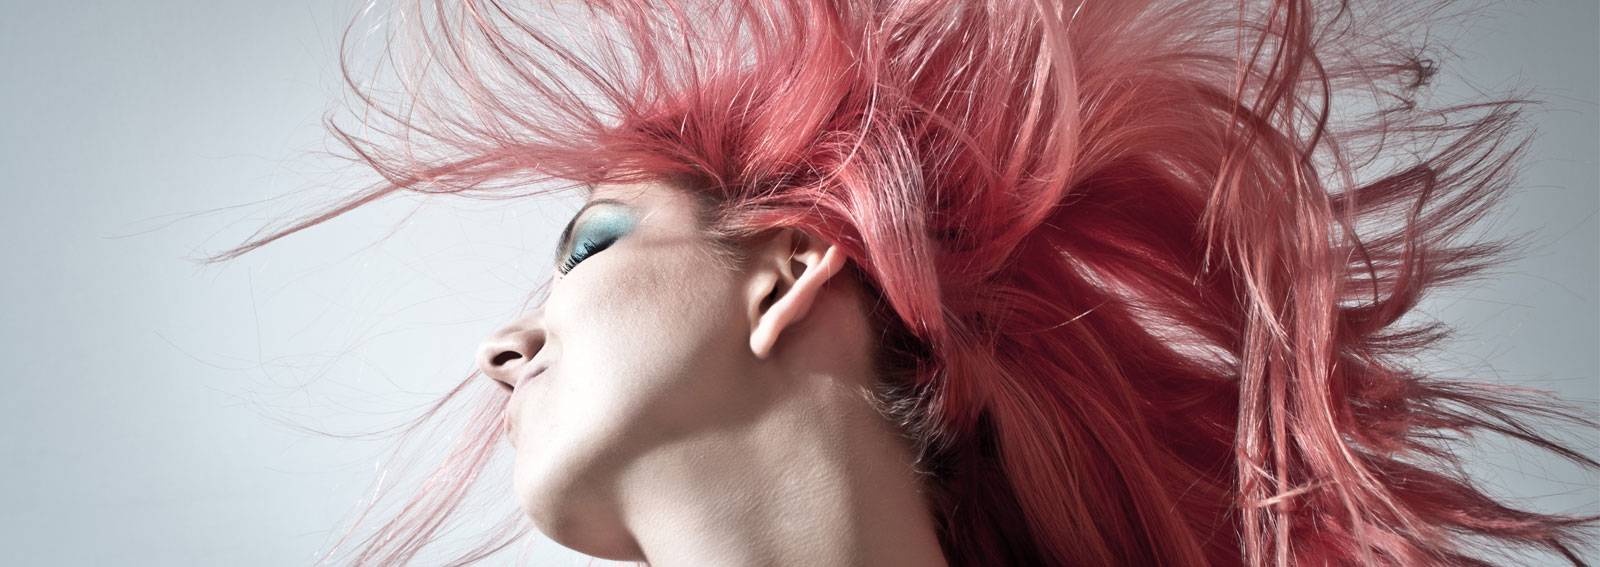 sorbet-hair-capelli-color-sorbetto-estate-2018-cover-desktop